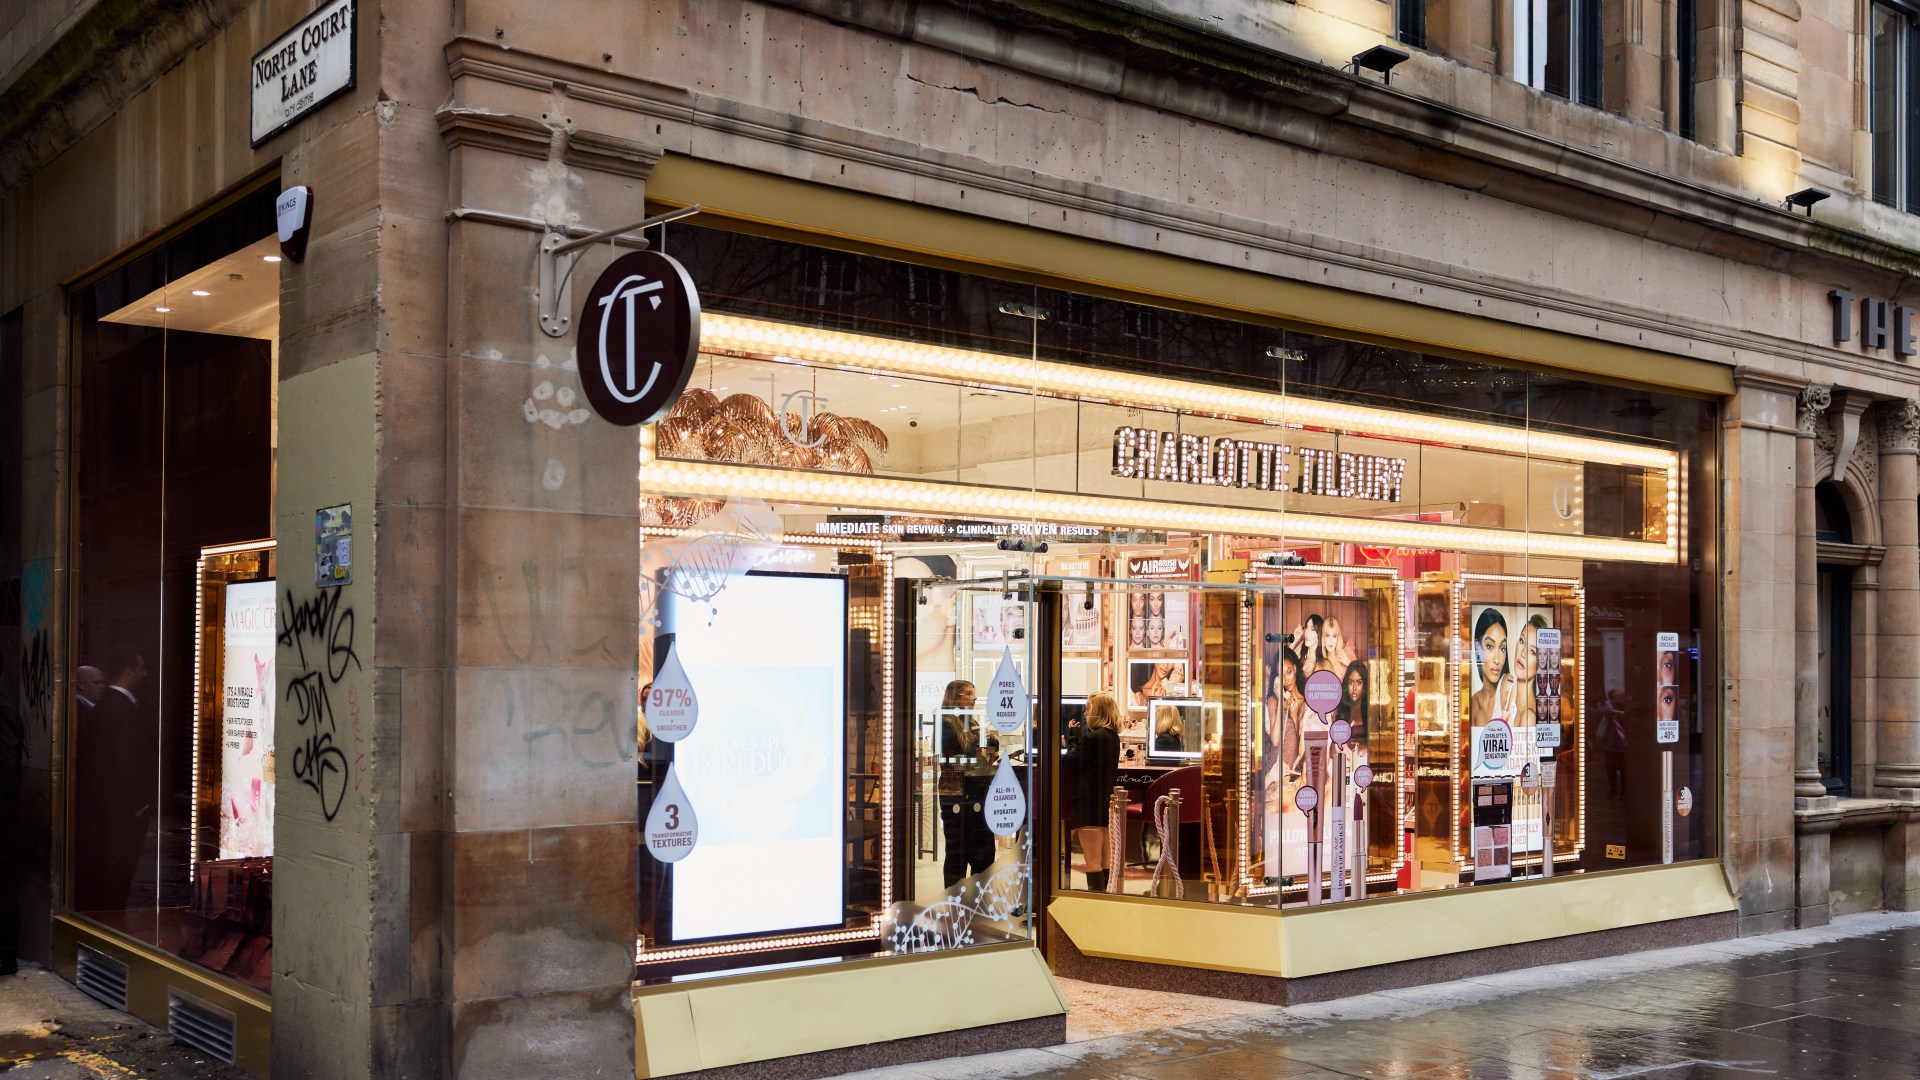 First look inside Scotland’s first Charlotte Tilbury Beauty Wonderland store [Video]